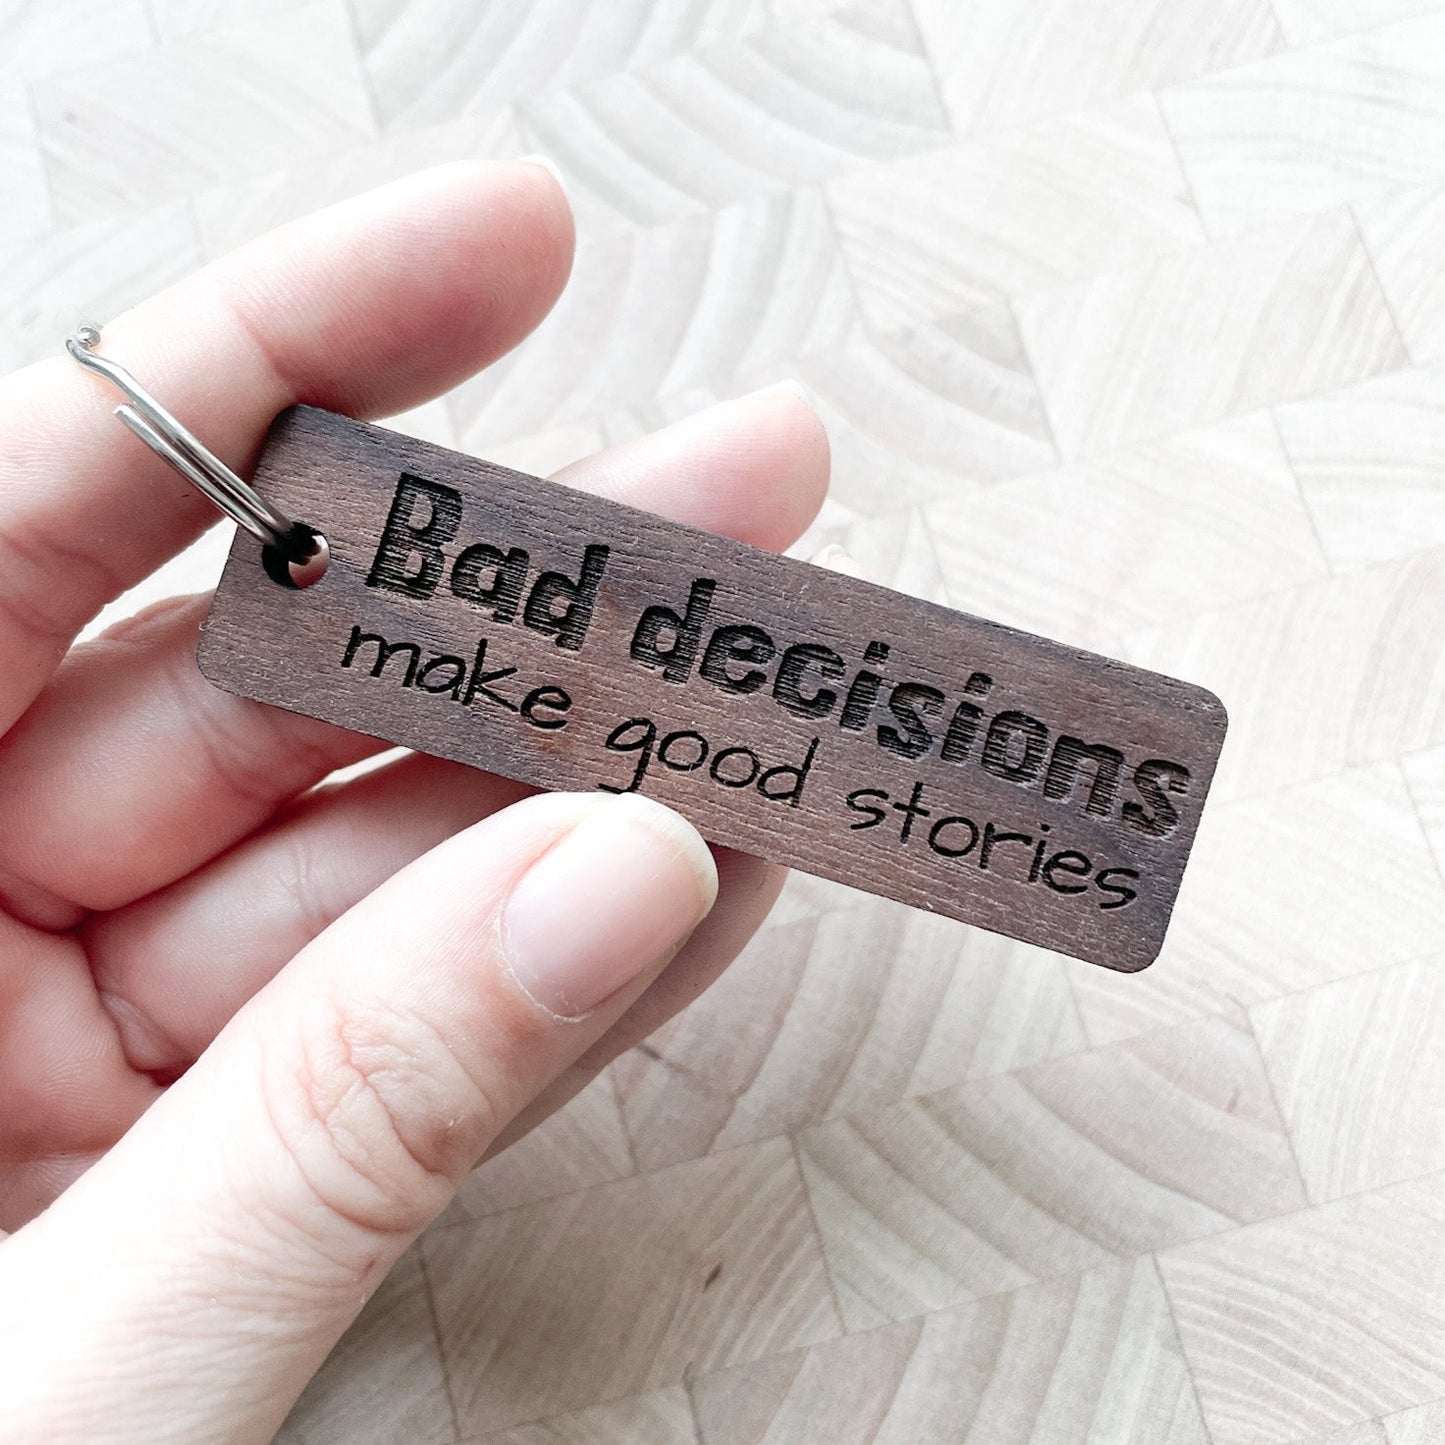 Bad decisions make good stories walnut keychain.